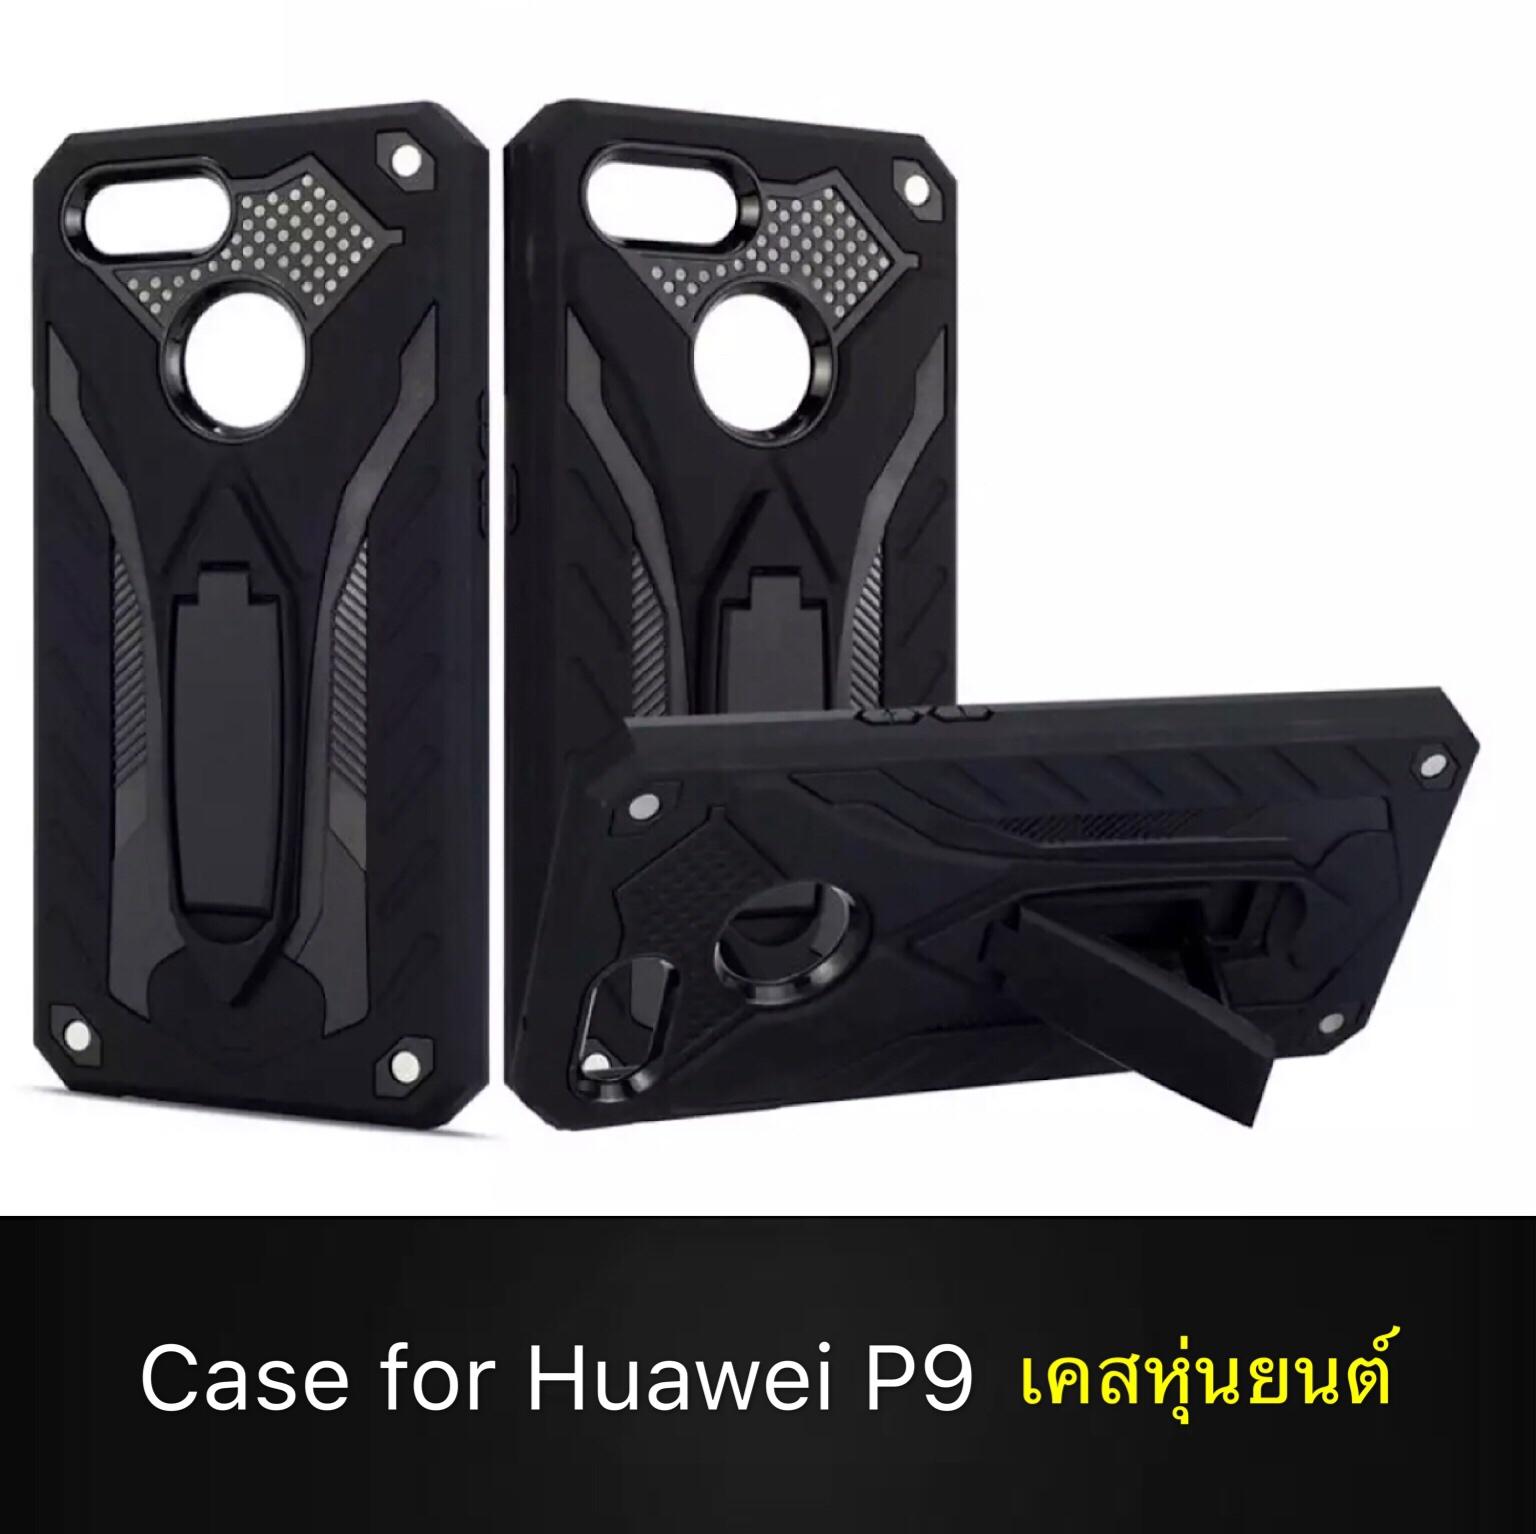 Case Huawei P9 เคสหัวเว่ย P9 เคสนิ่ม TPU เคสหุ่นยนต์ เคสไฮบริด มีขาตั้ง huawei P9 เคสกันกระแทก สินค้าใหม่ TPU CASE